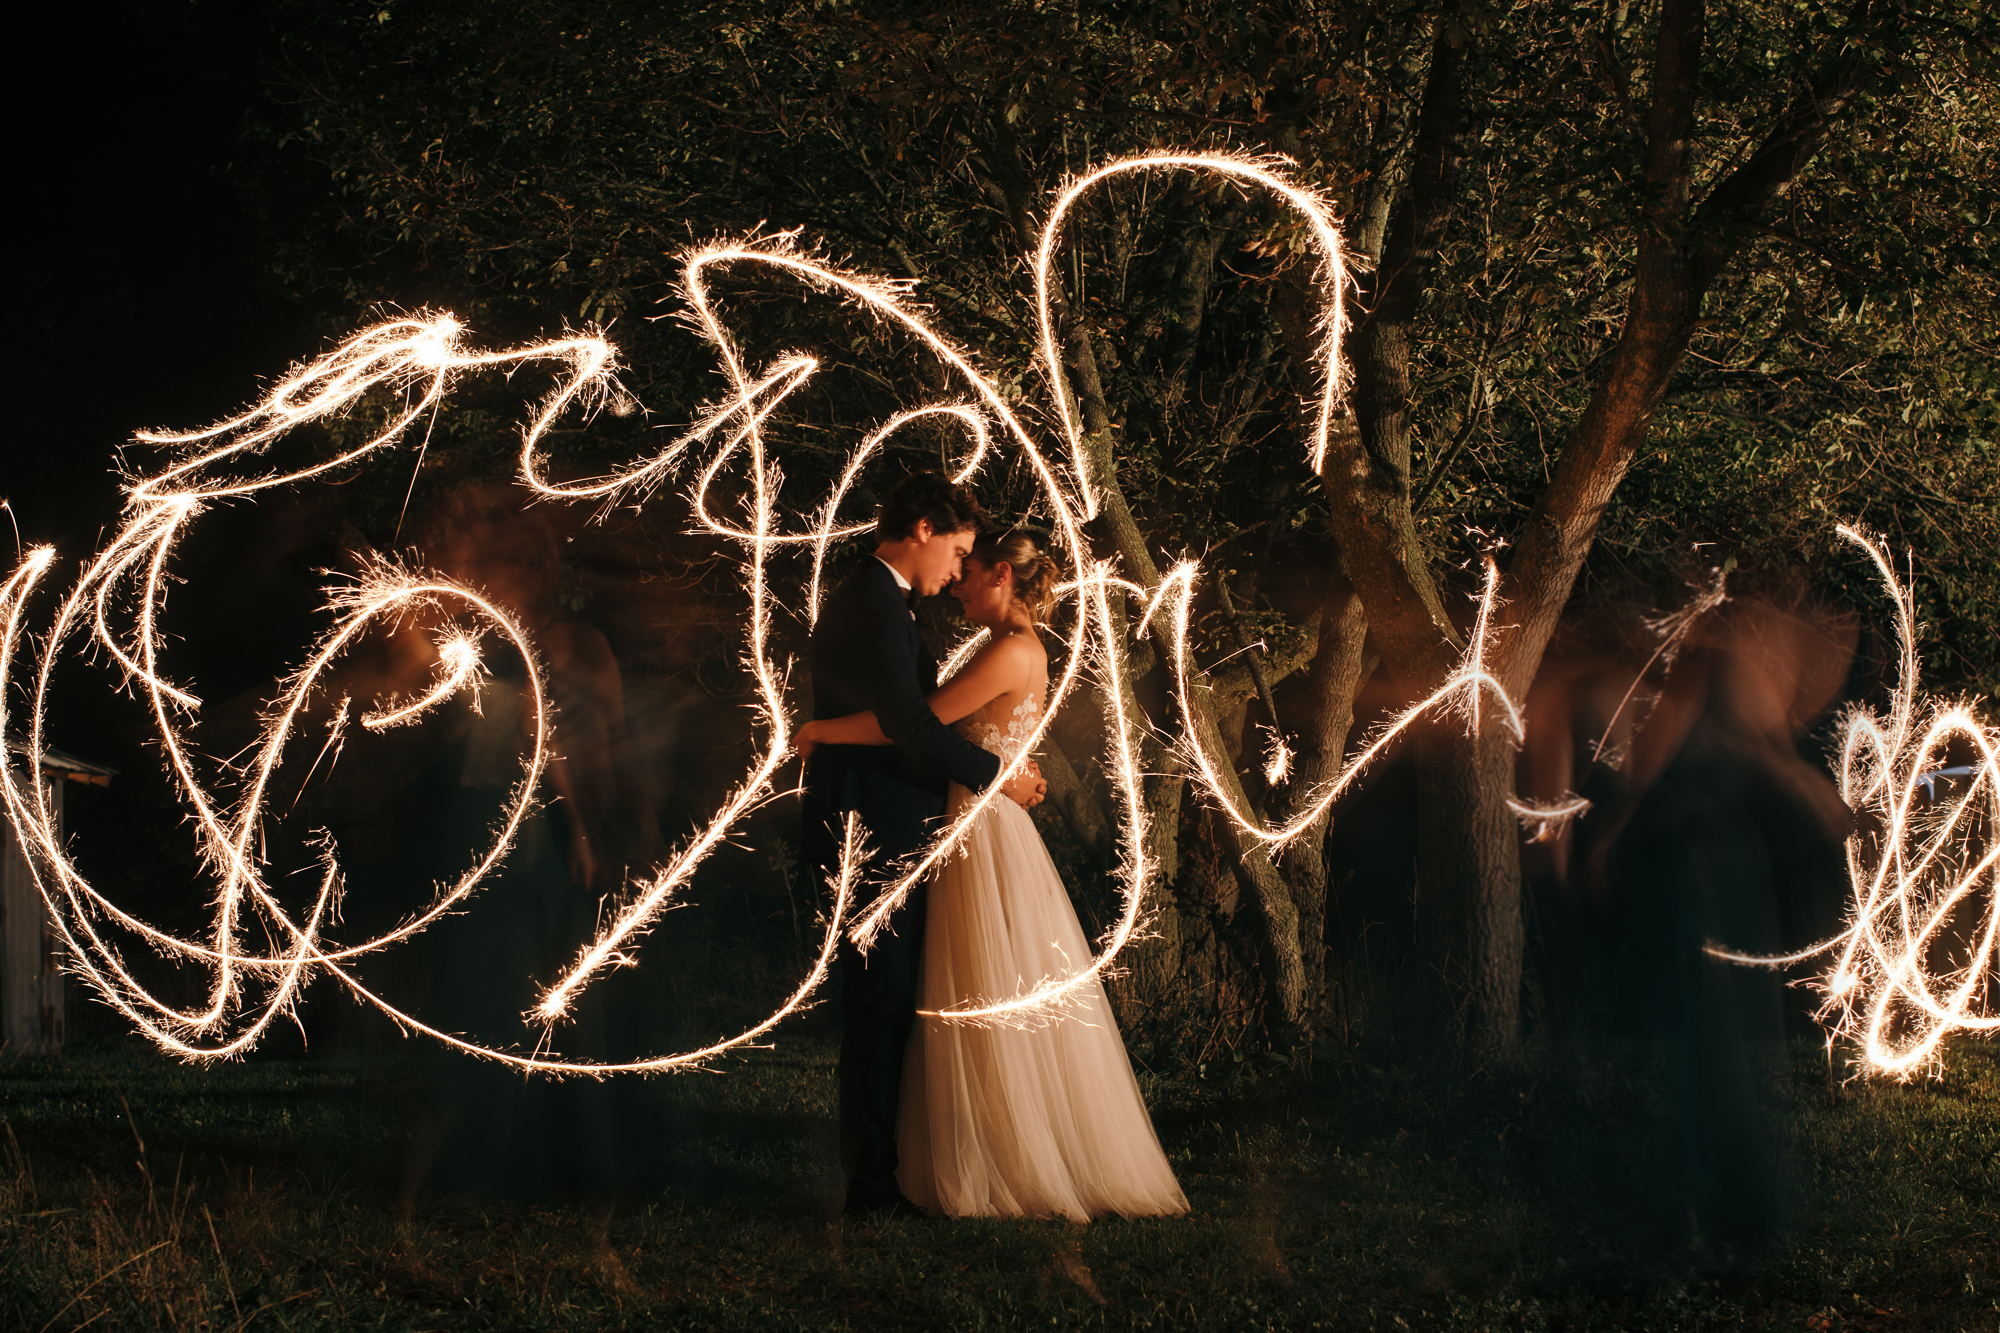 sparkler wedding photo sparklers